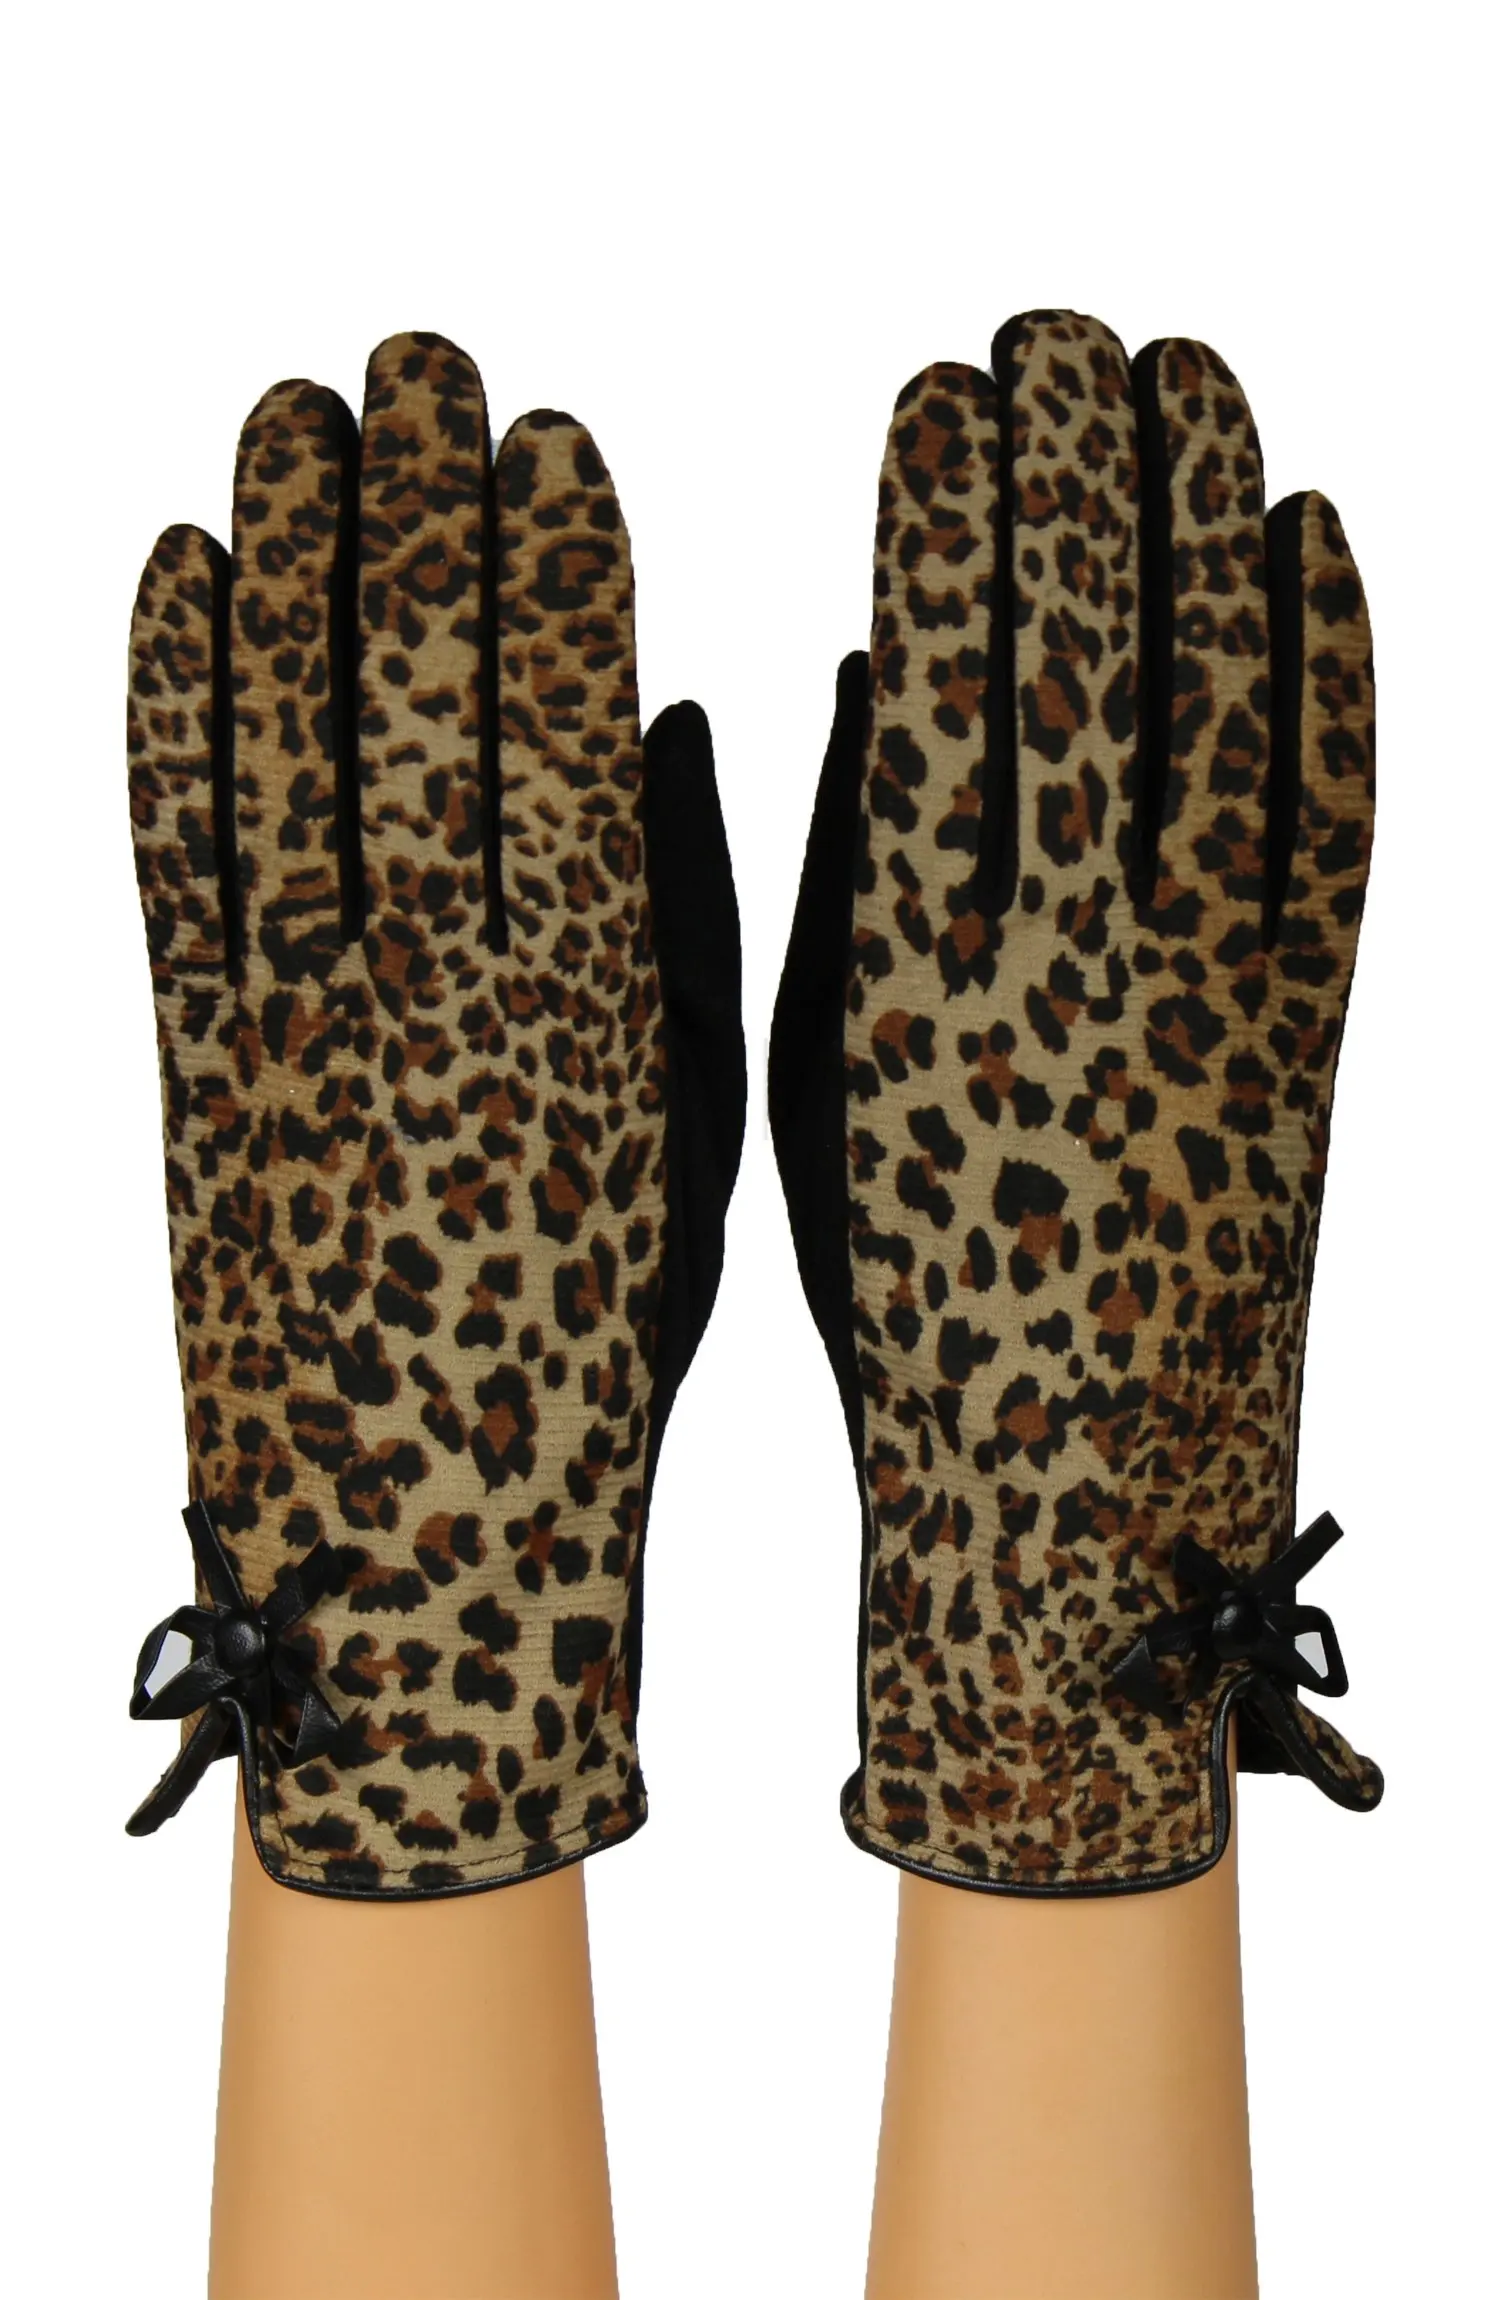 Cheap Gloves Leopard Print, find Gloves Leopard Print deals on line at ...